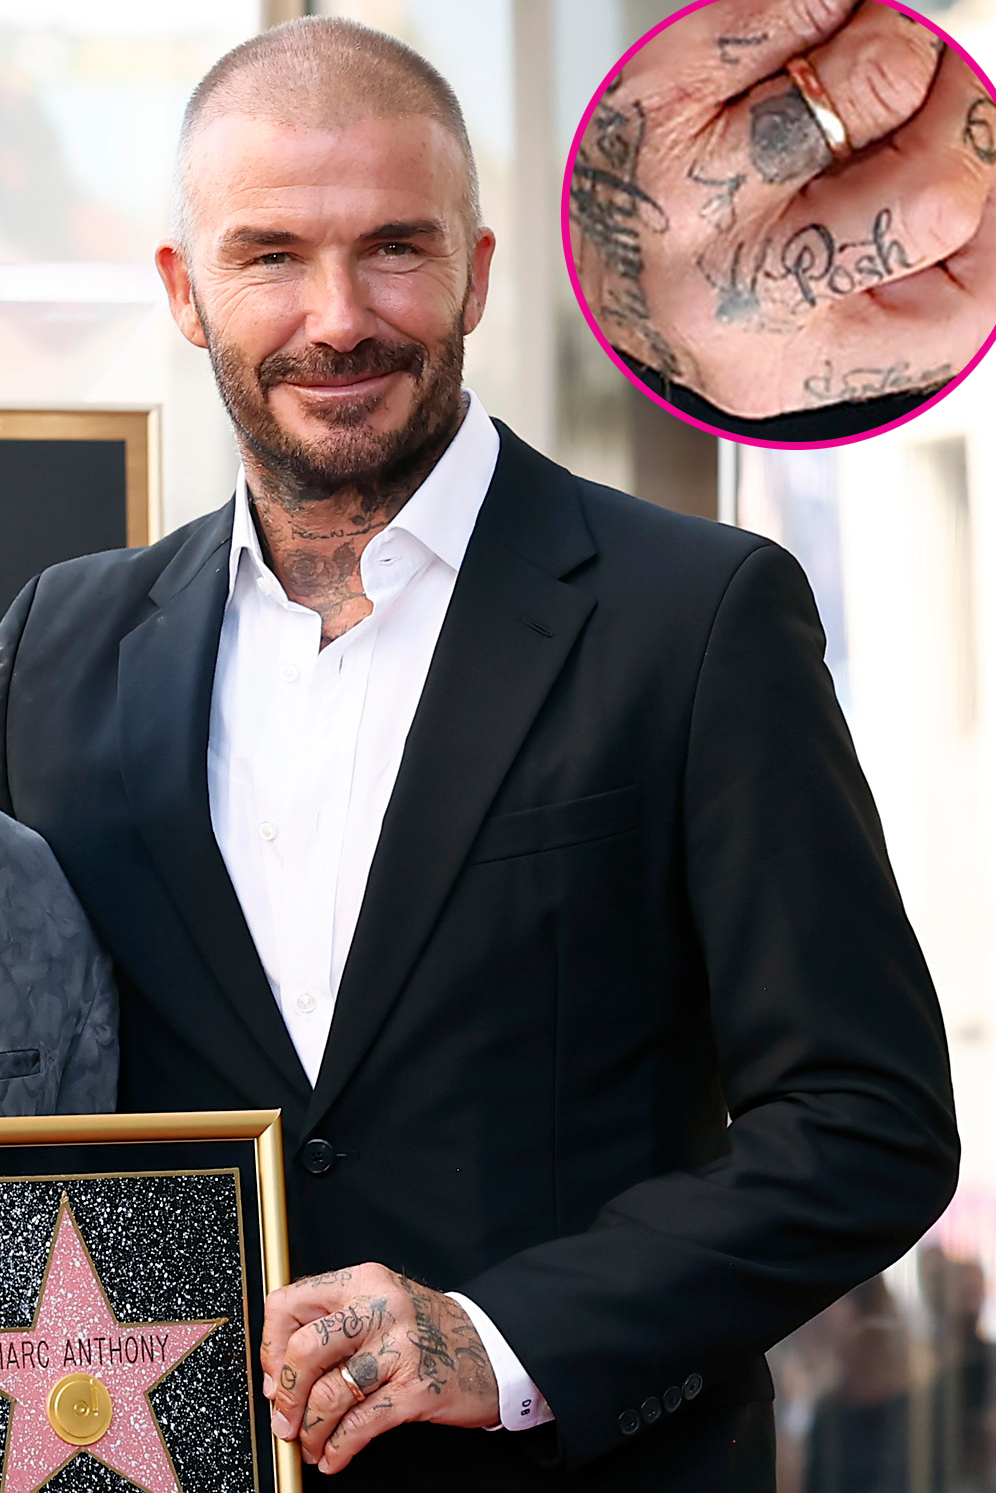 Brooklyn Beckham Shows Off New Neck Tattoo Tribute To Fiancée Nicola Peltz  - 8days